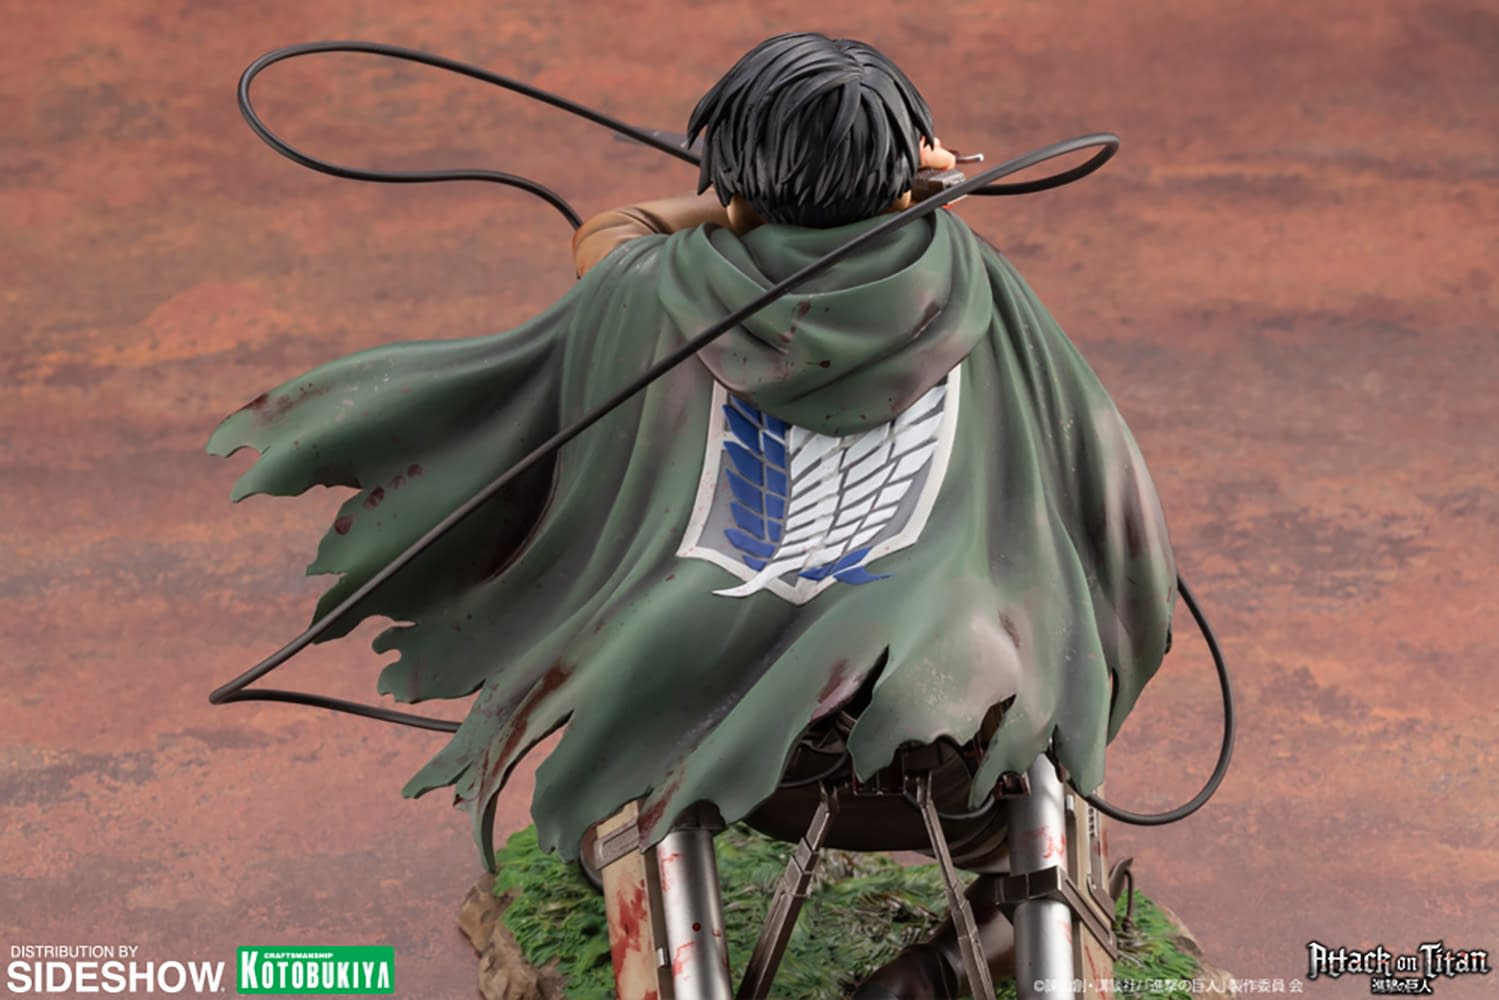 "Attack on Titan" Levi Gets New Statue From Kotobukiya